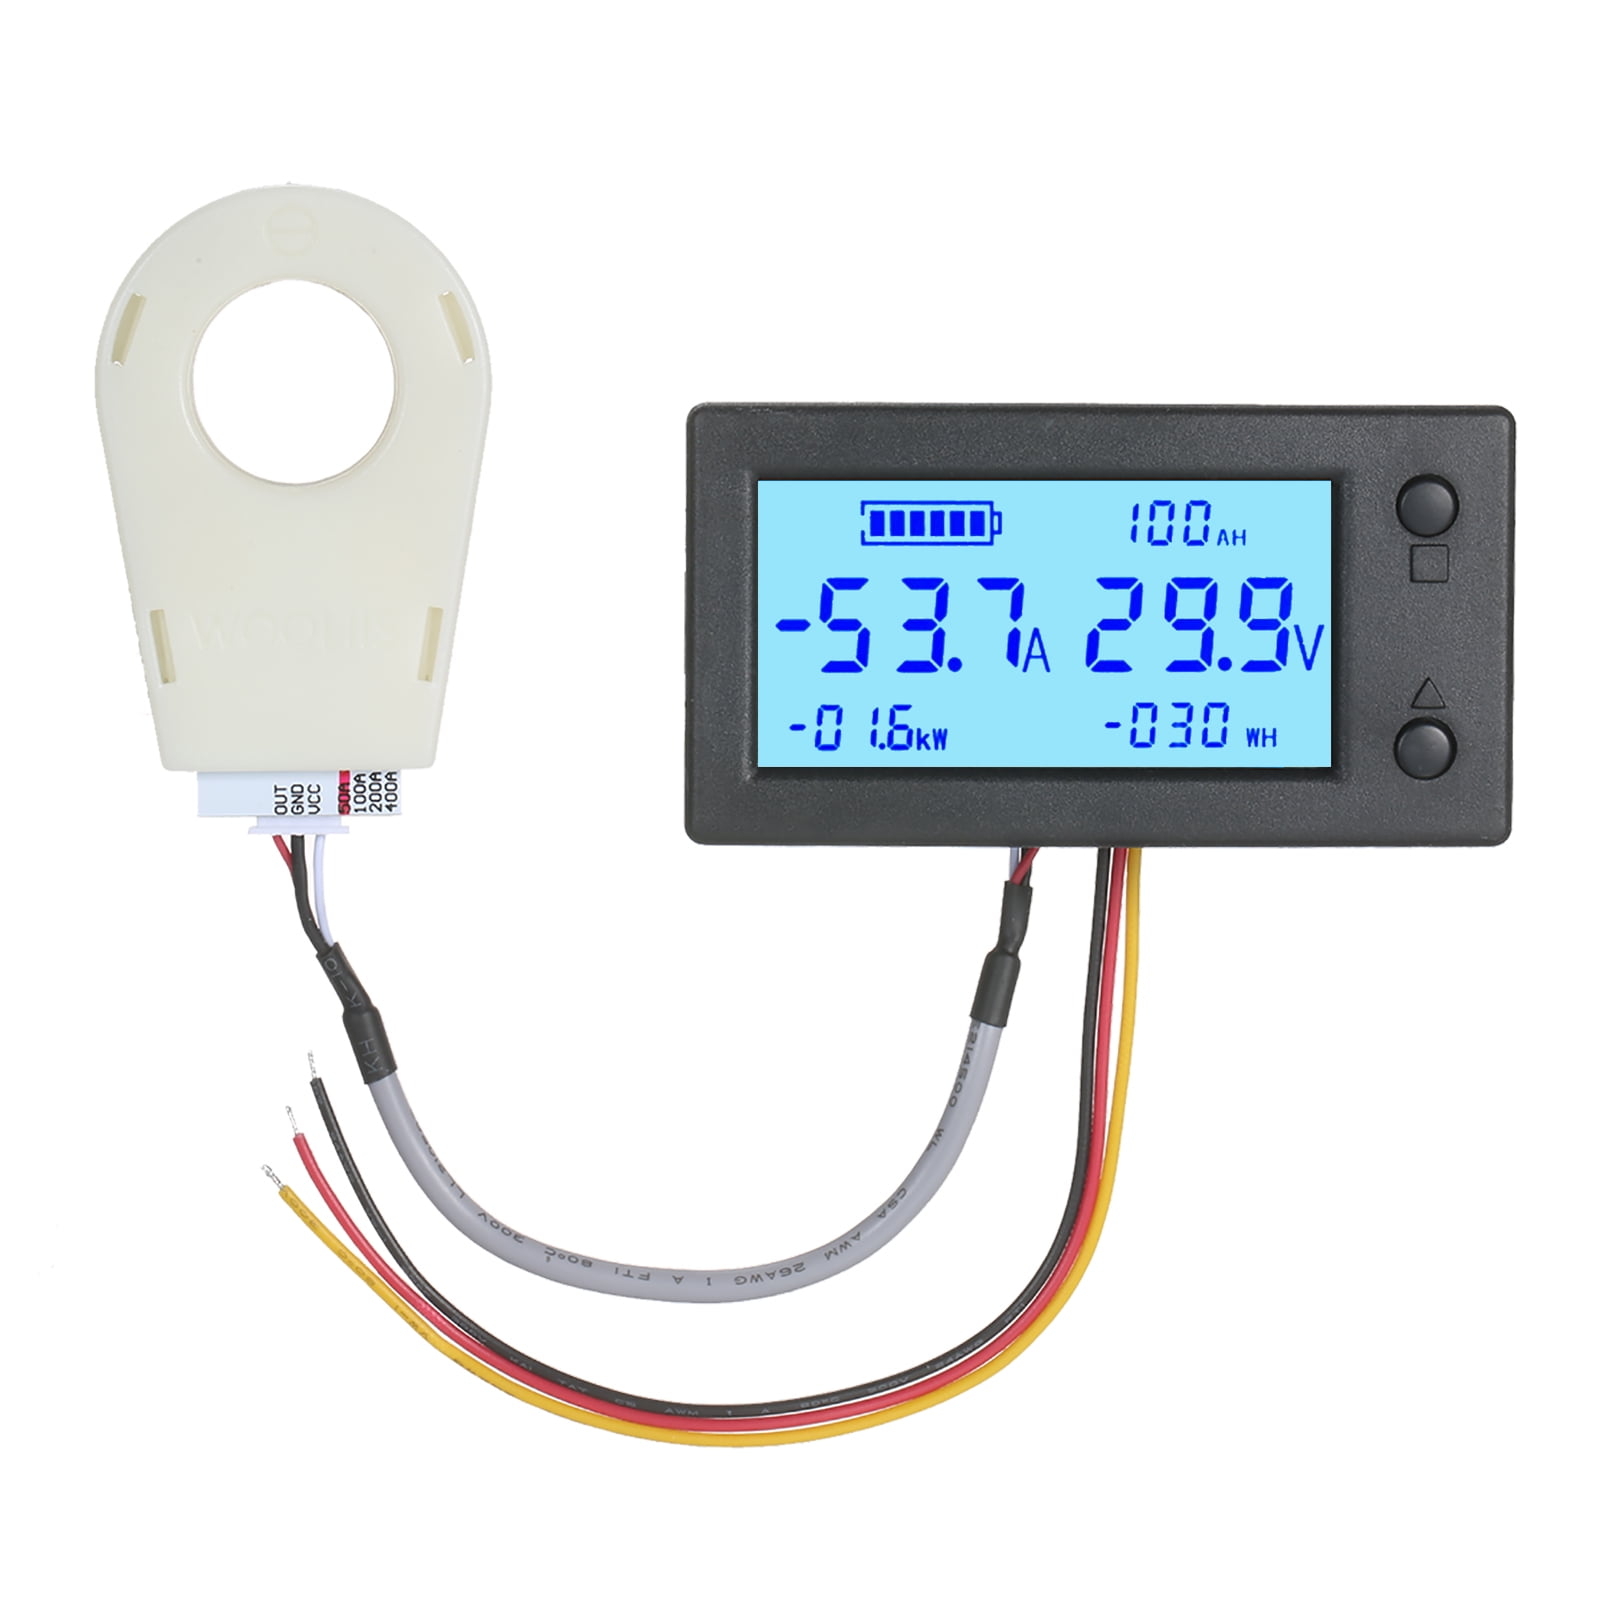 Details about   AC Current Voltage Amperage Power Energy Panel Meter LCD Digital Display Ammeter 